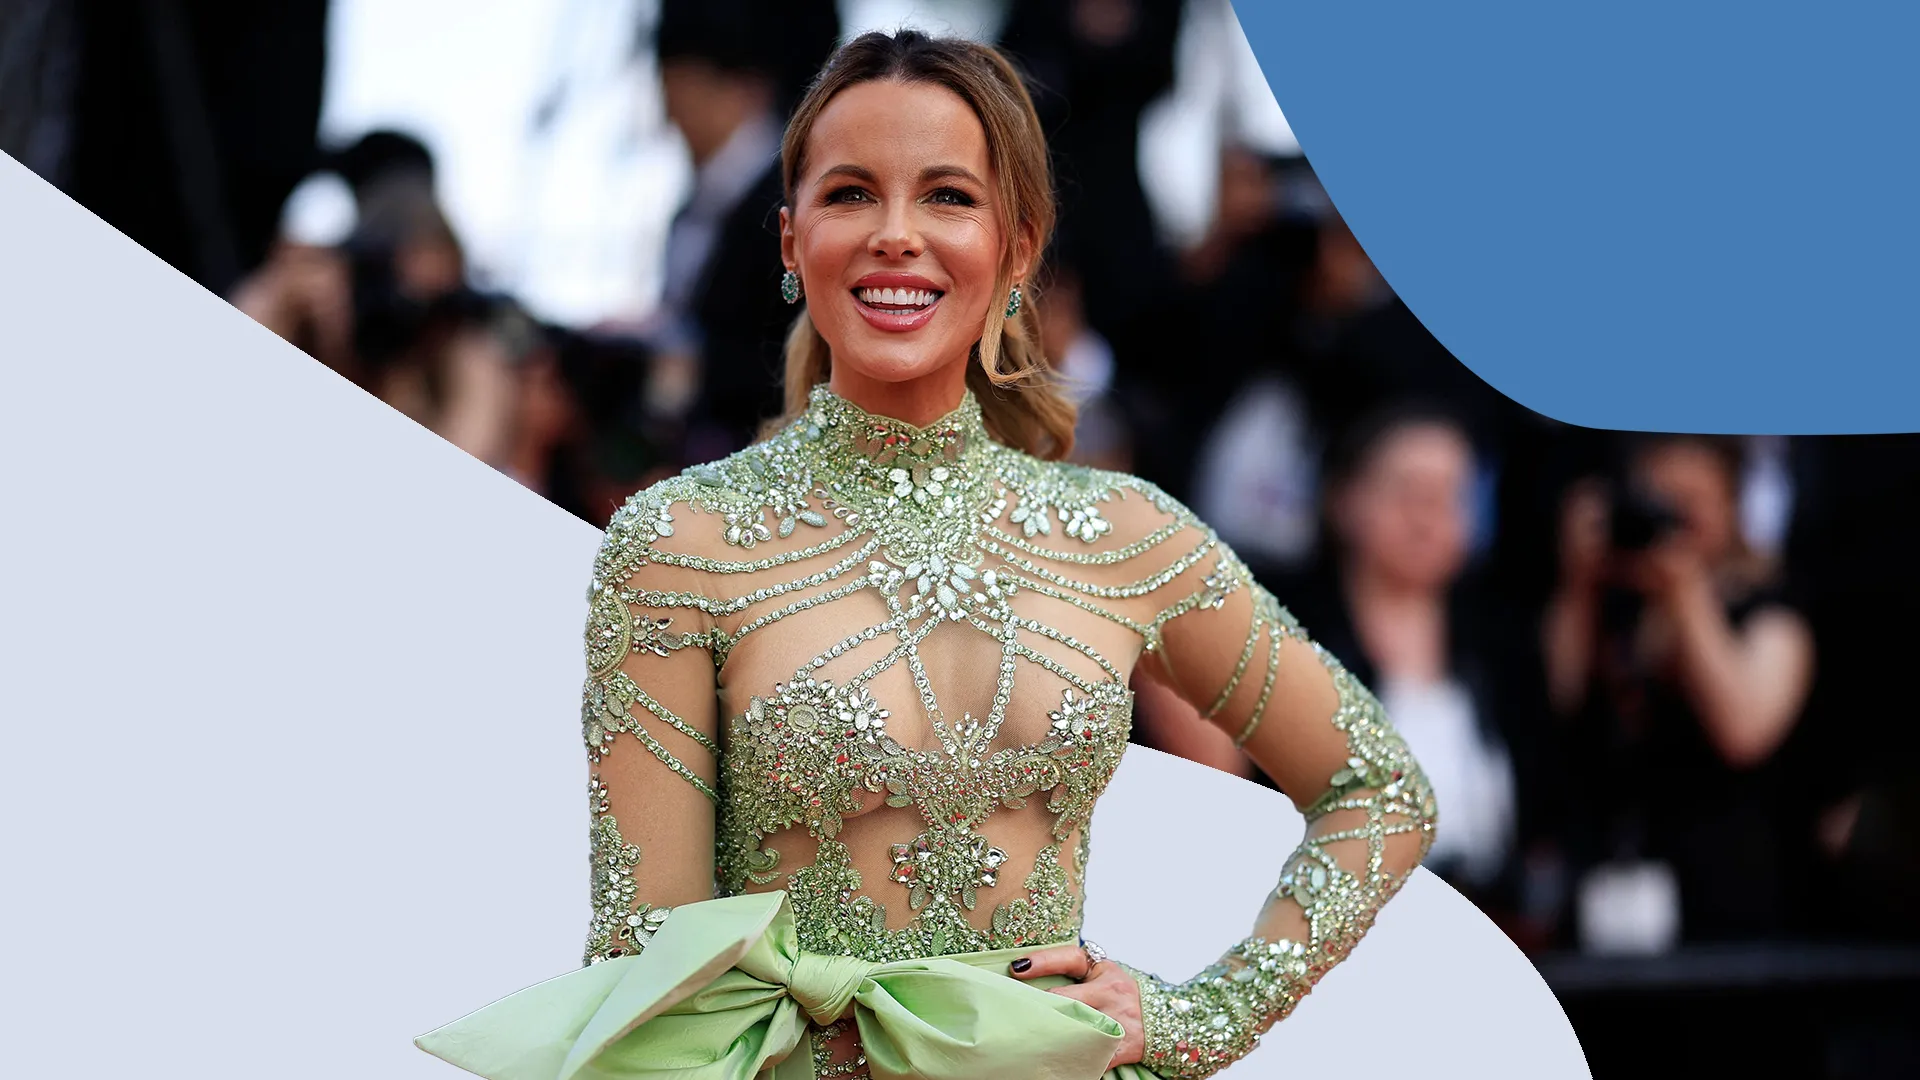 Kate Beckinsale Daring Green Bodysuit At The Cannes Film Festival